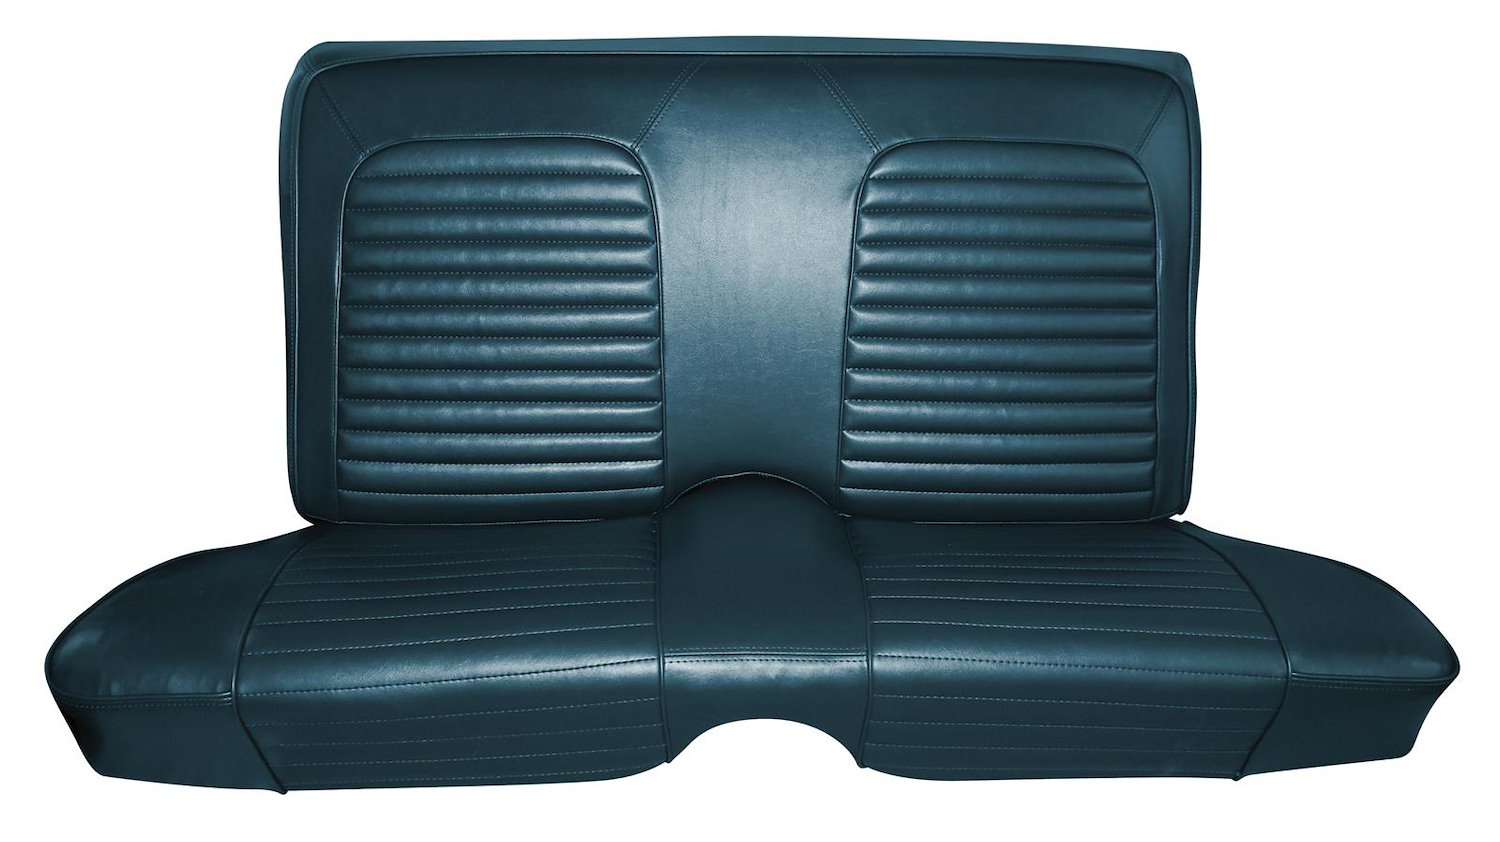 1966 Ford Falcon Futura Sedan Two-Tone Interior Rear Bench Seat Upholstery Set